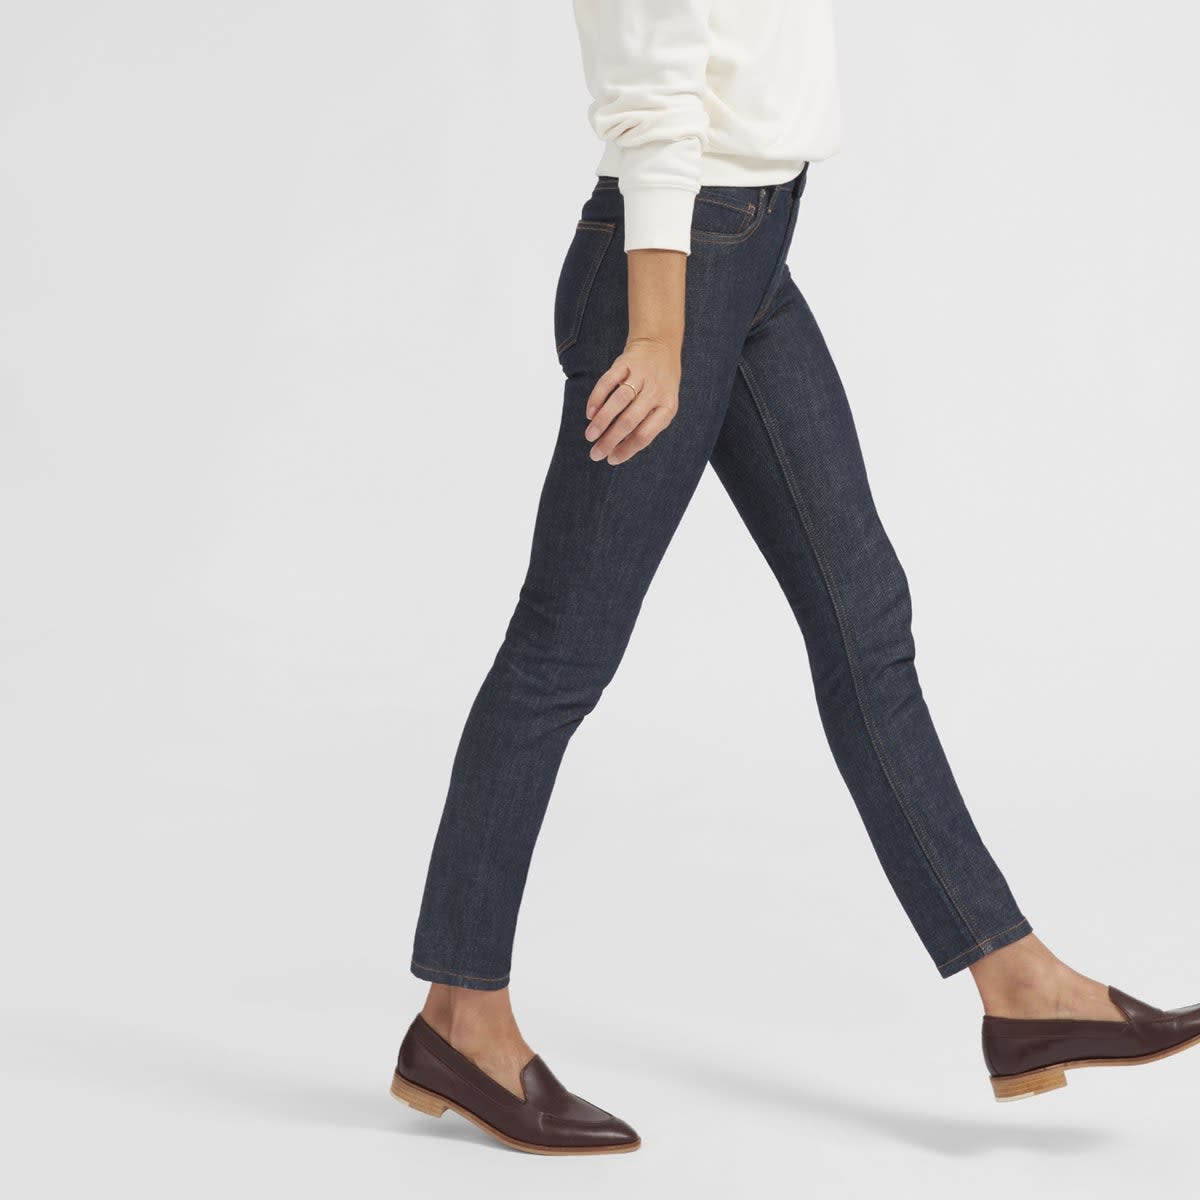 The Mid-Rise Skinny Jean (Regular), $68